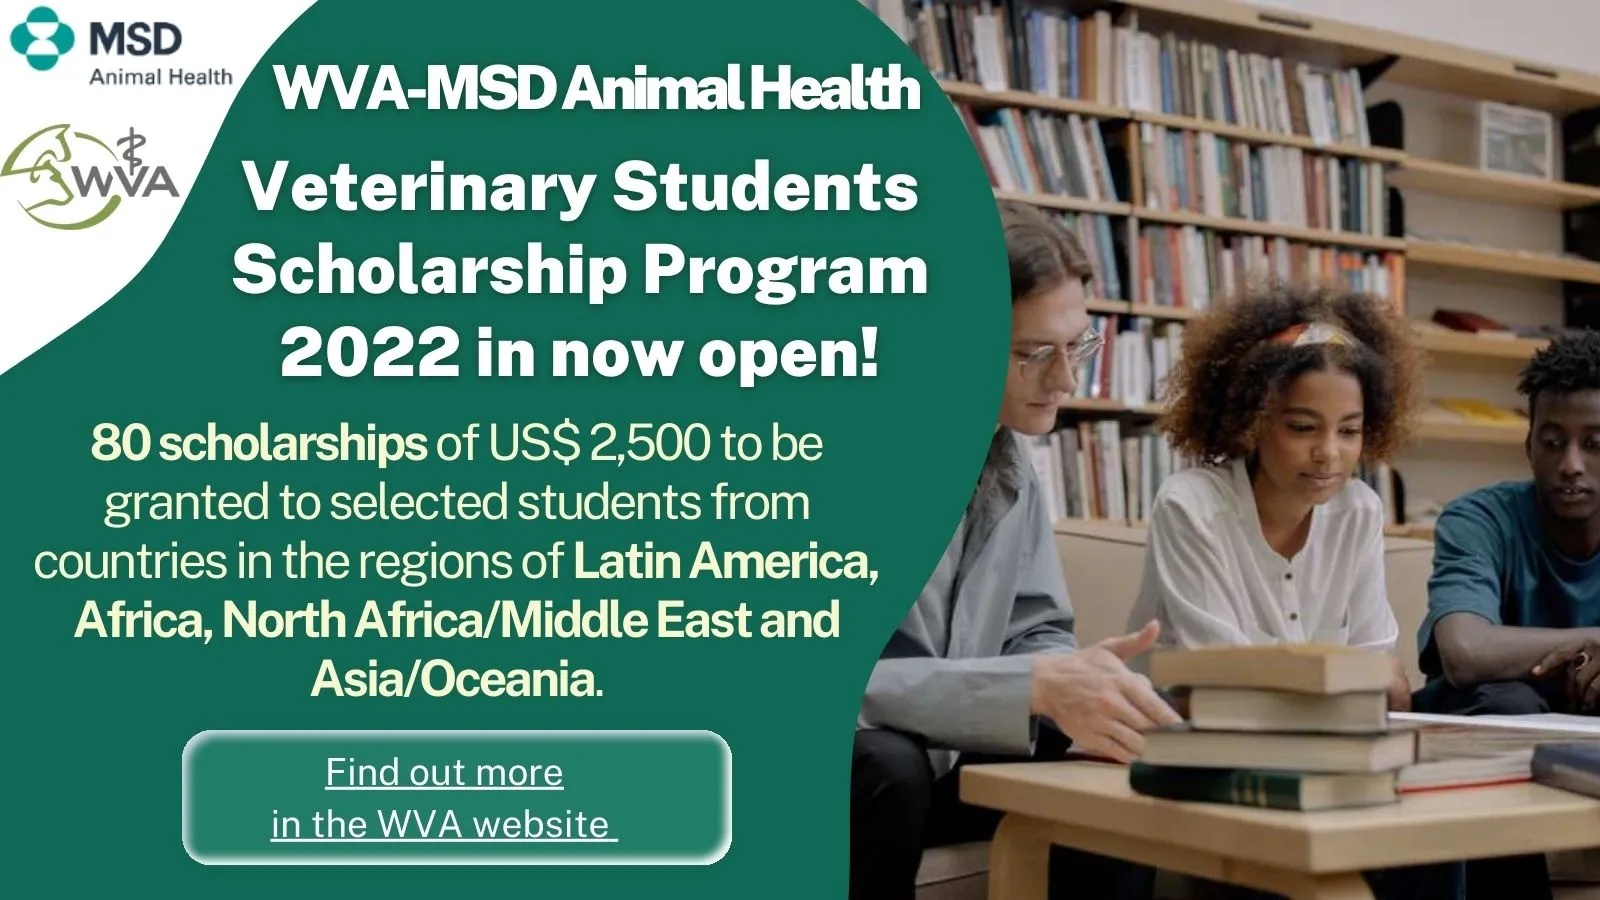 World Veterinary Association (WVA) 2022 Scholarship Program for African Students